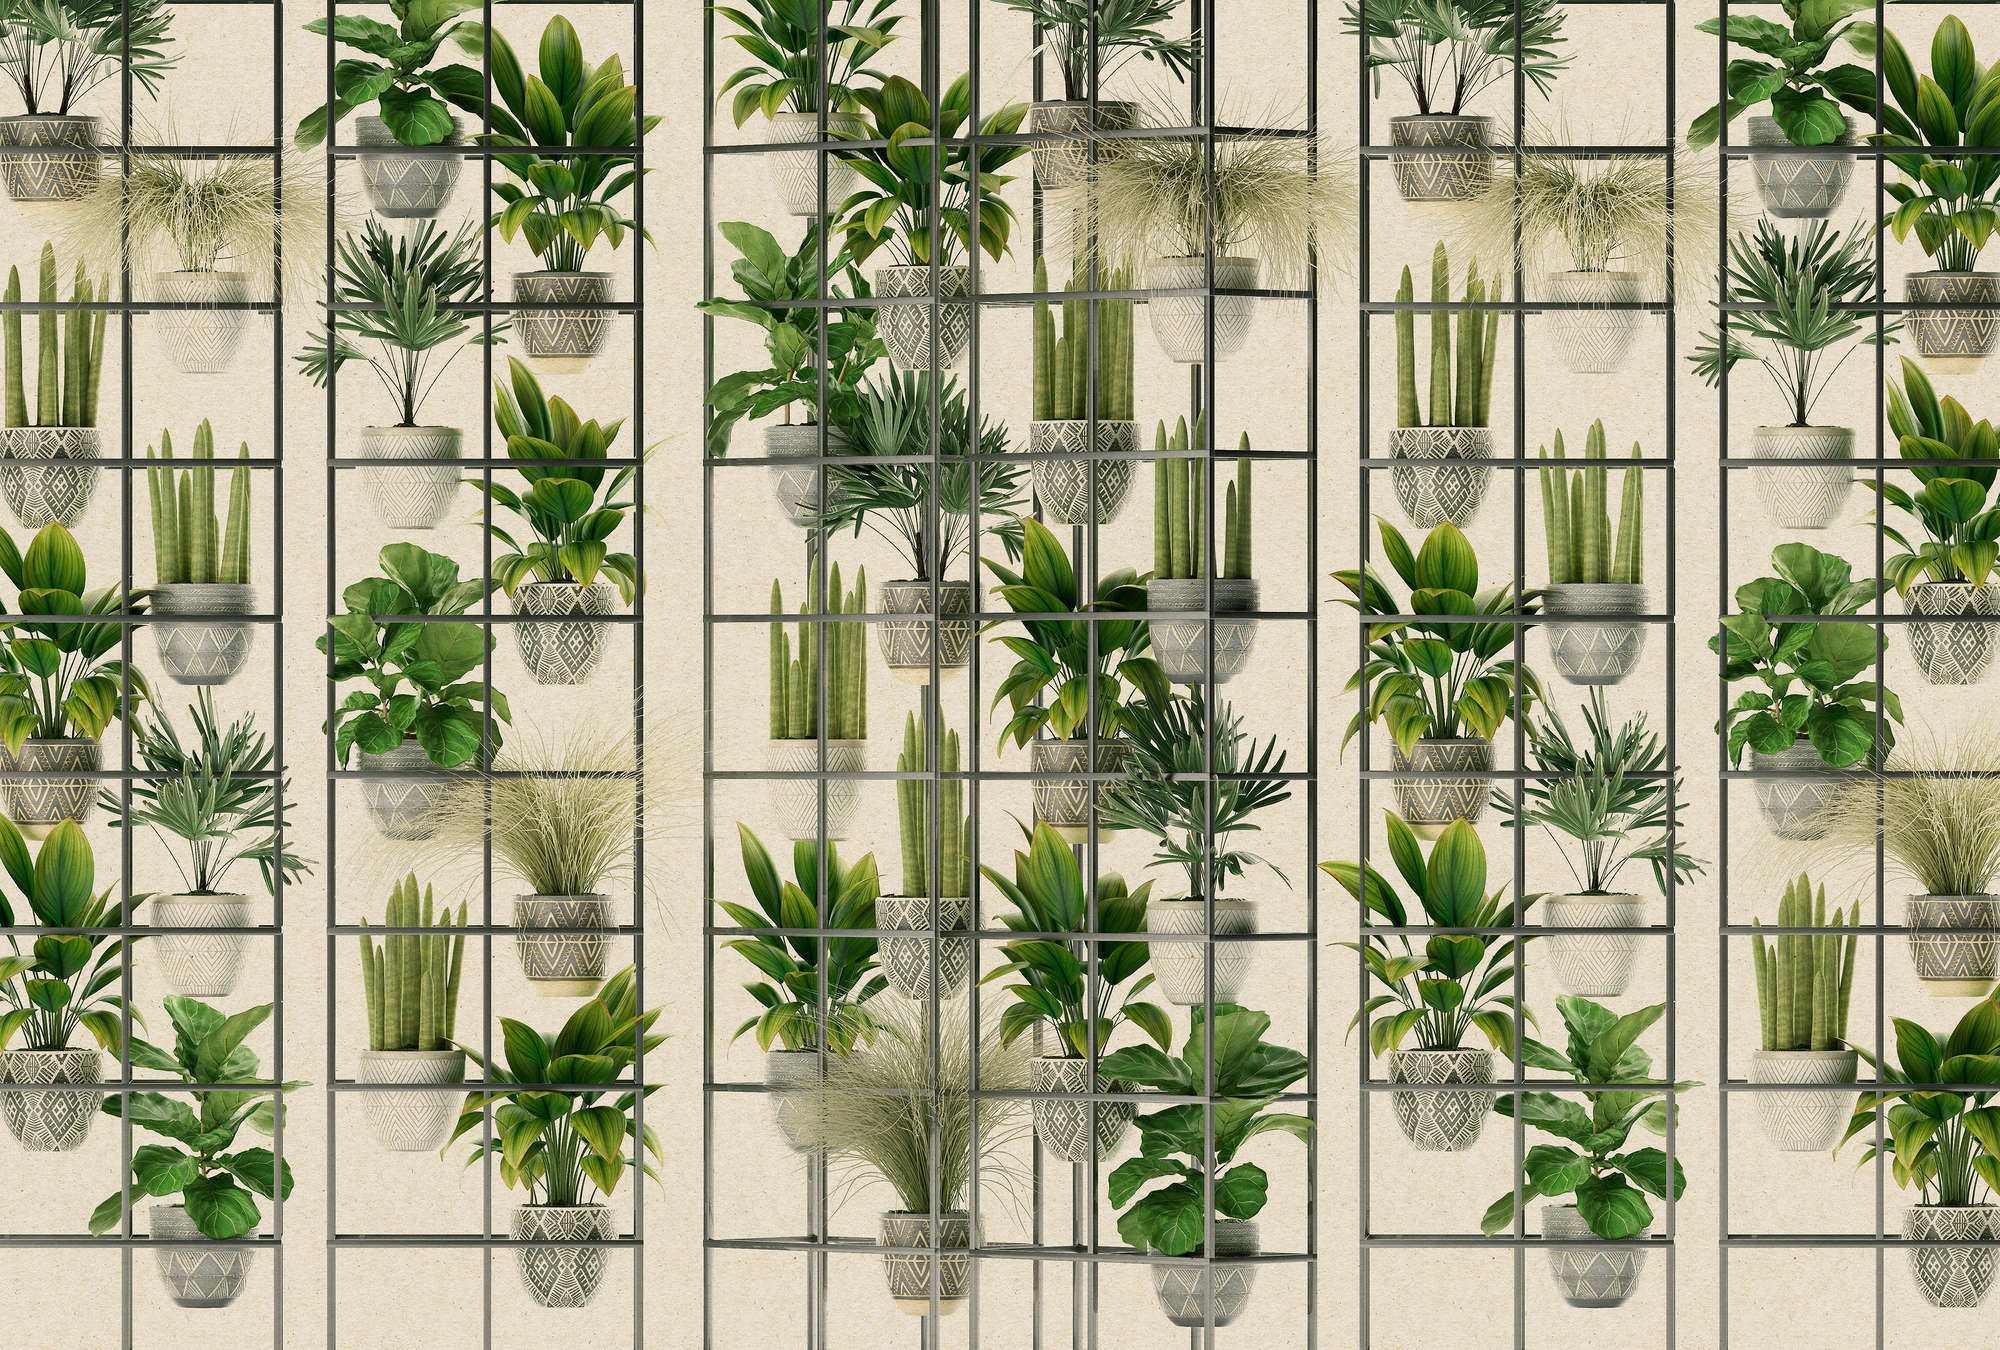             Plant Shop 2 - photo wallpaper modern plant wall in green & grey
        